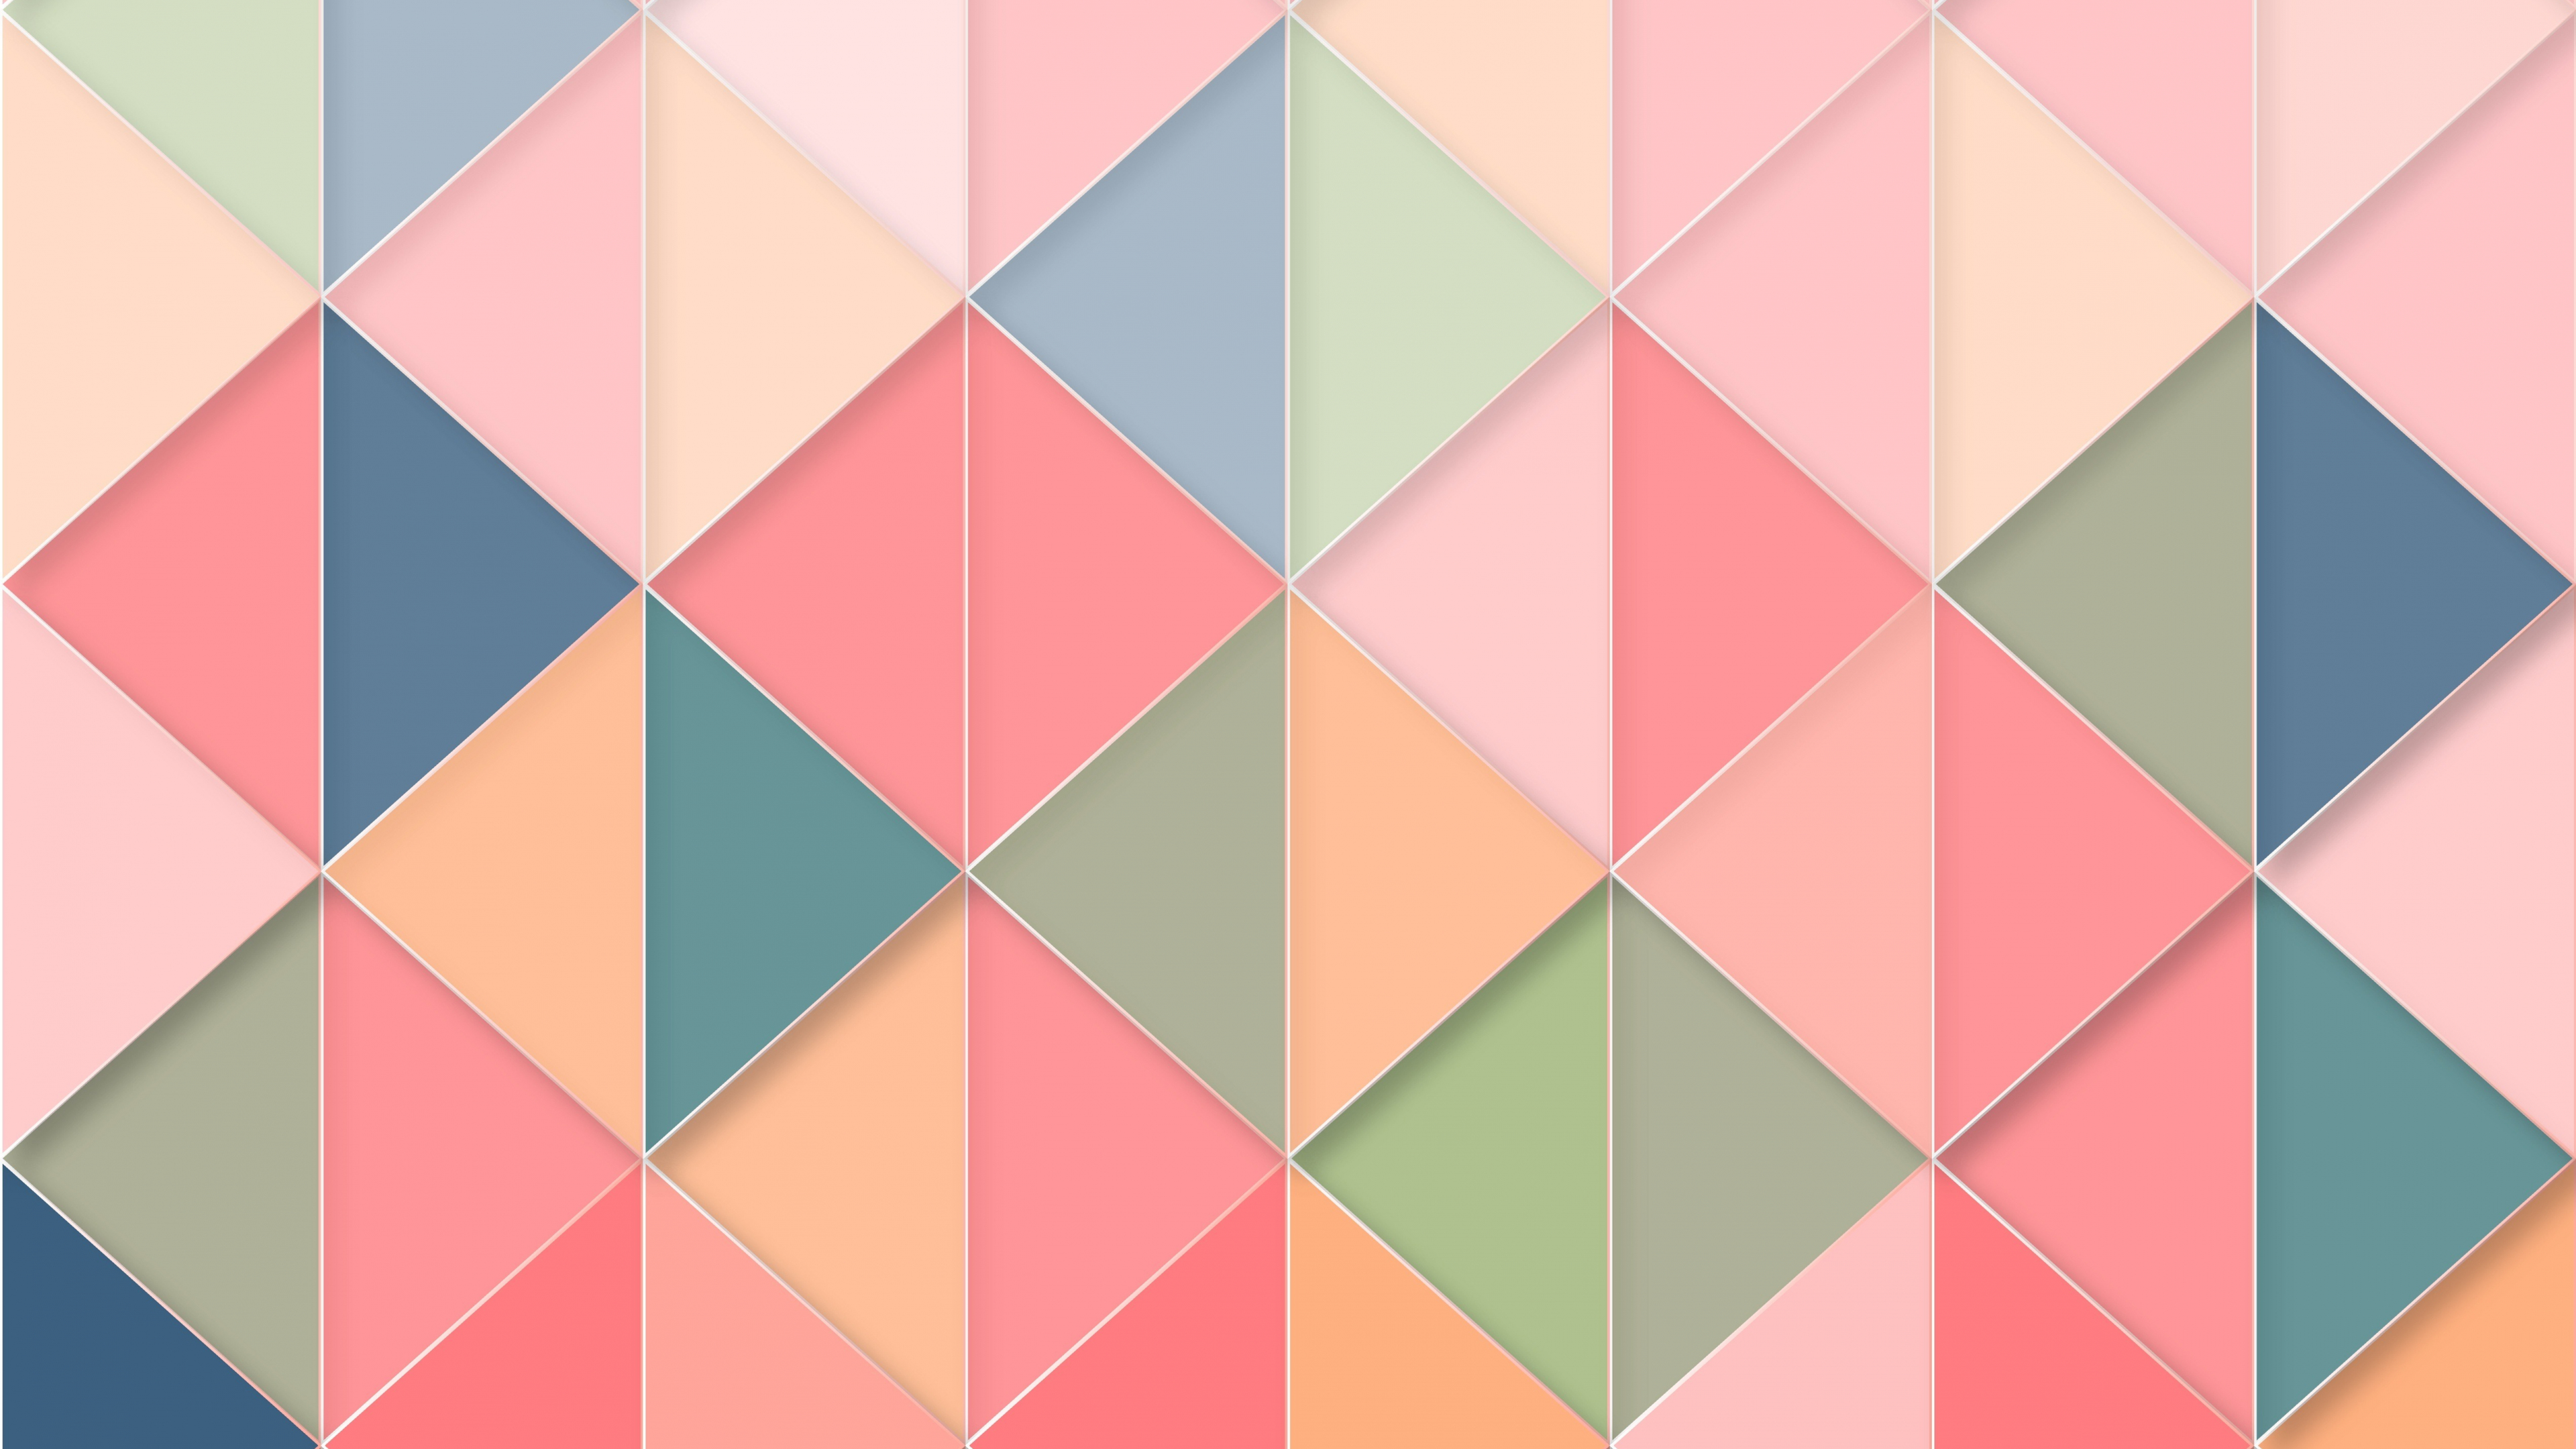 Download wallpaper 3840x2160 triangles, geometric, abstract, pattern 4k  wallpaper, uhd wallpaper, 16:9 widescreen 3840x2160 hd background, 2304